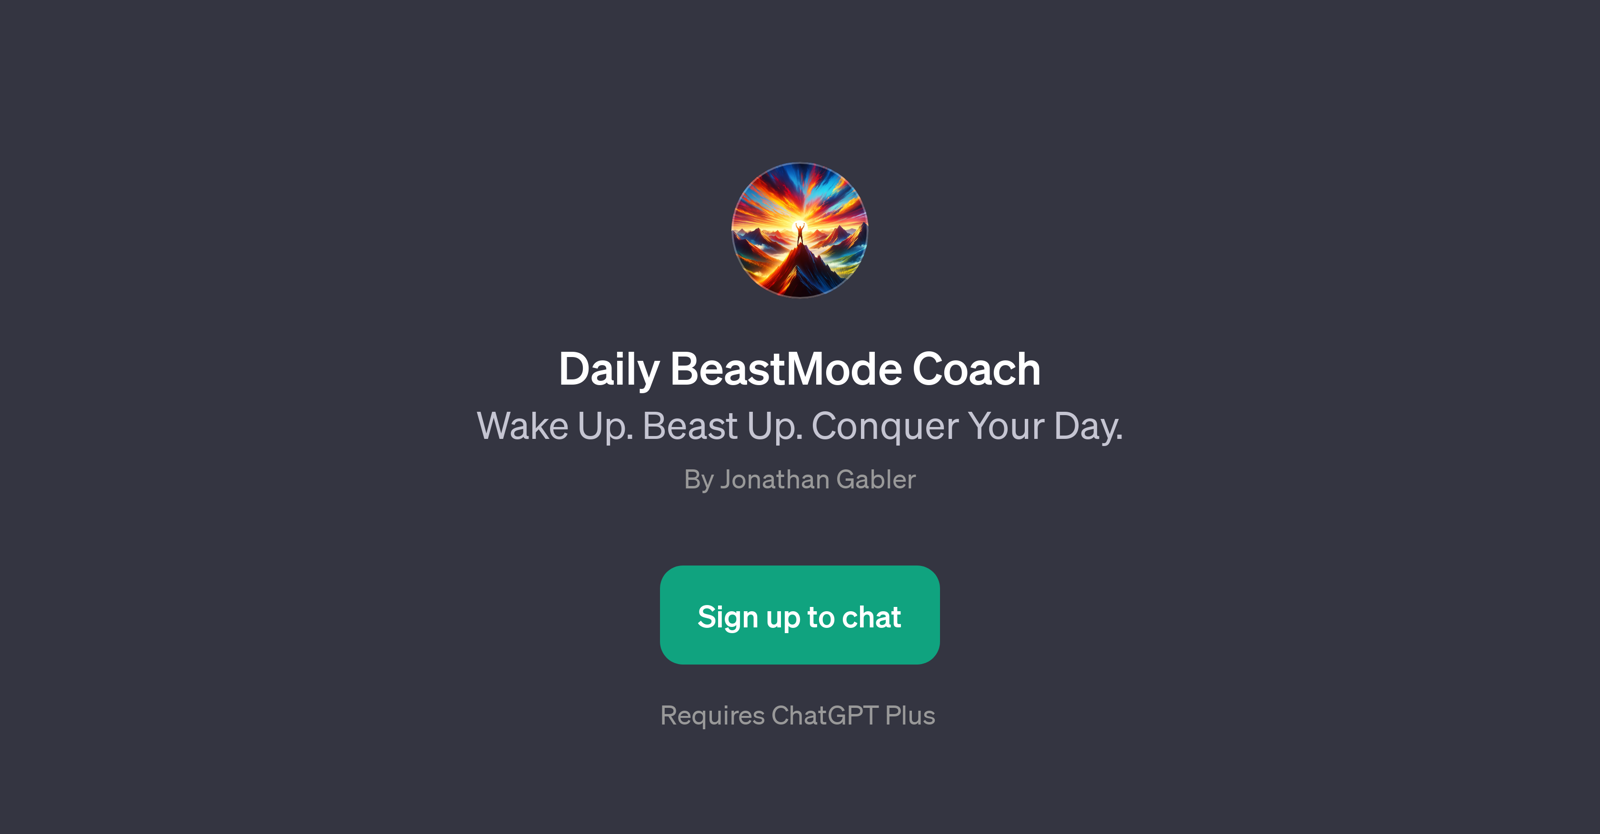 Daily BeastMode Coach website